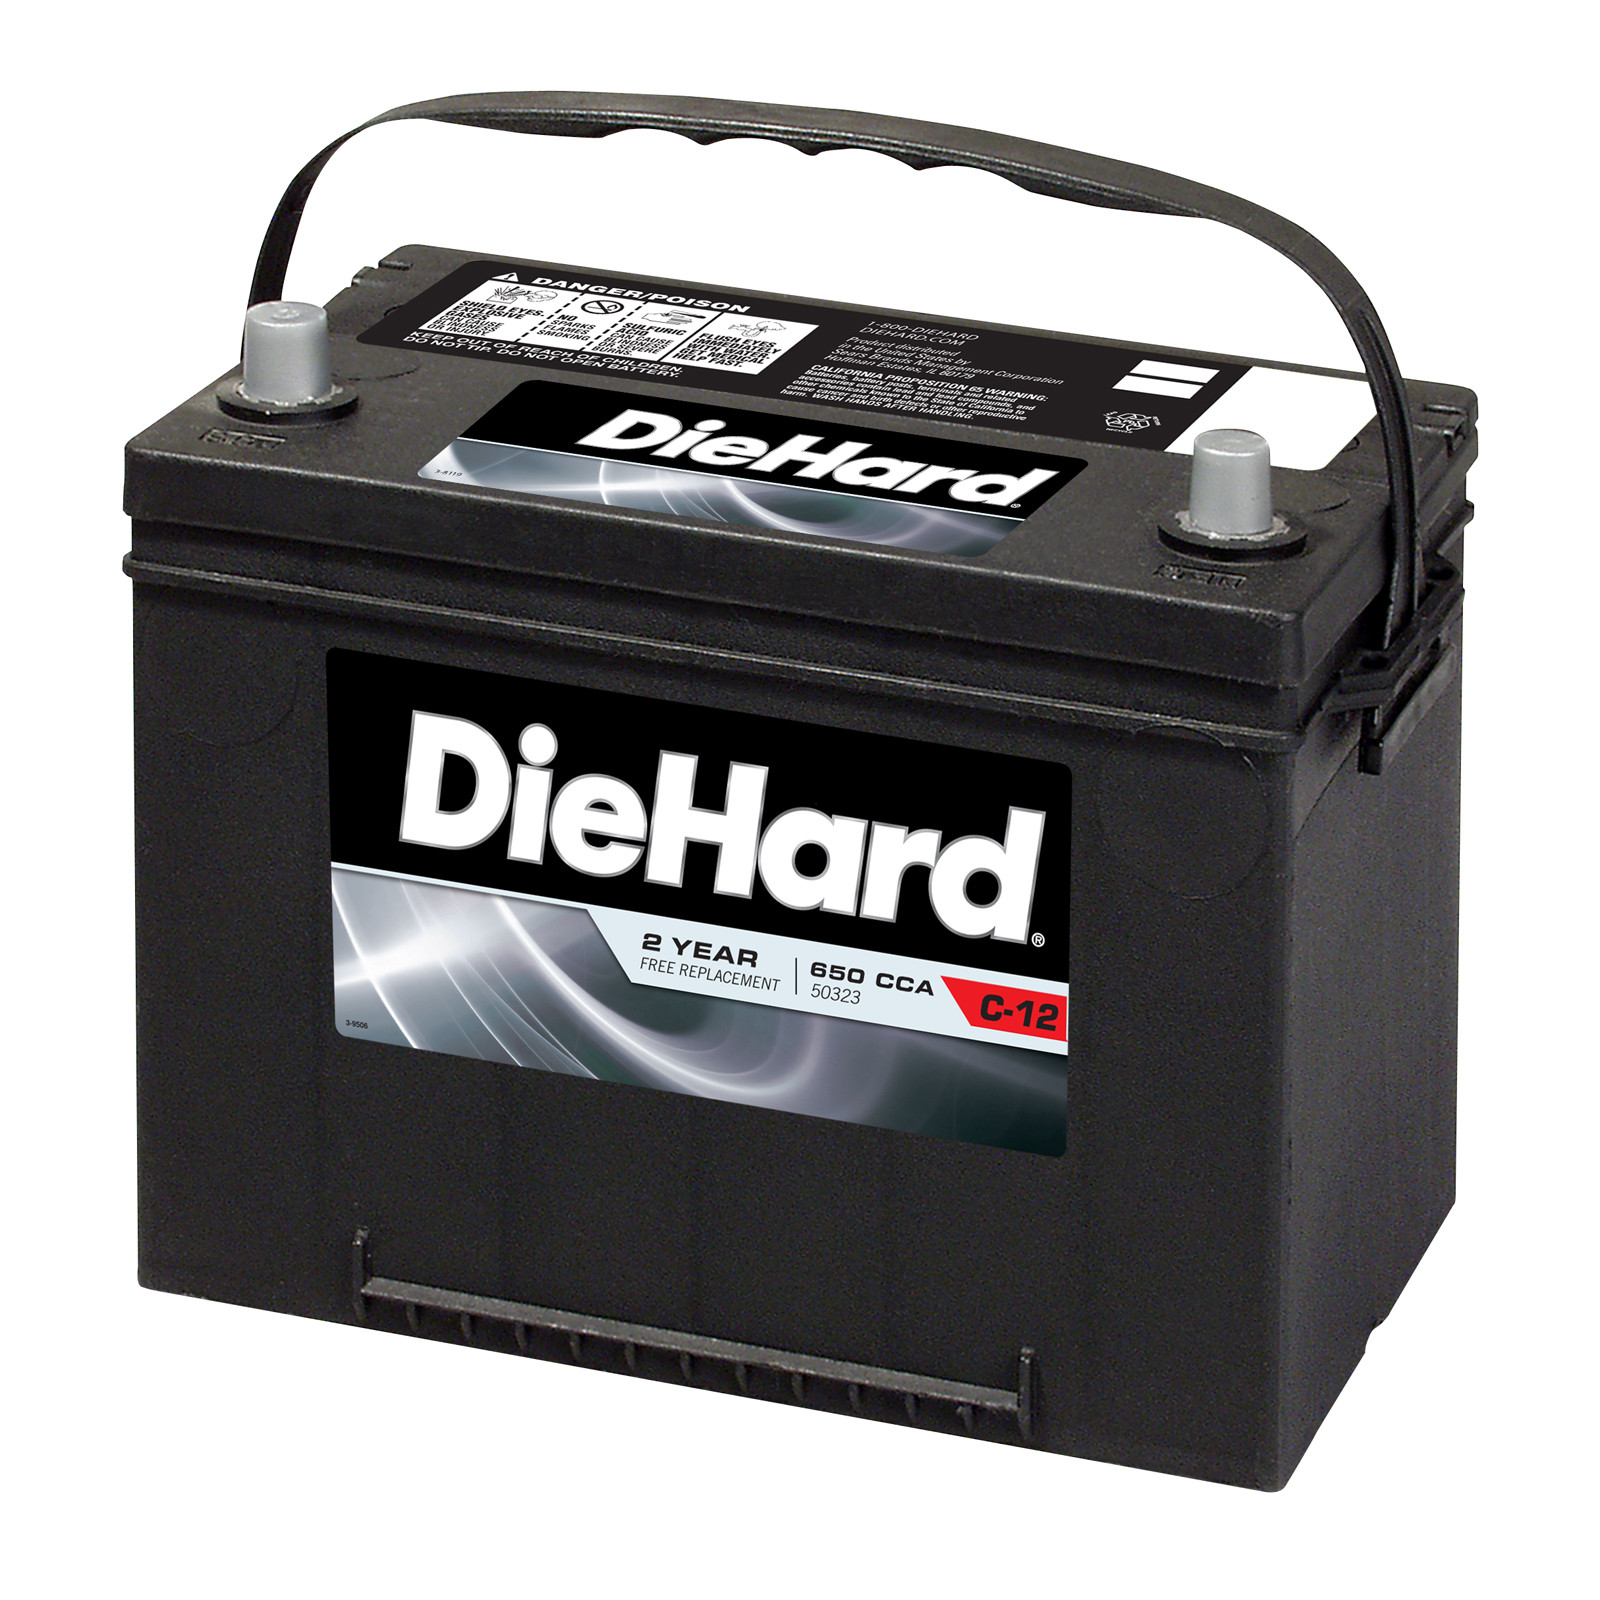 DieHard Automotive Battery 50323 - Group Size EP-24F